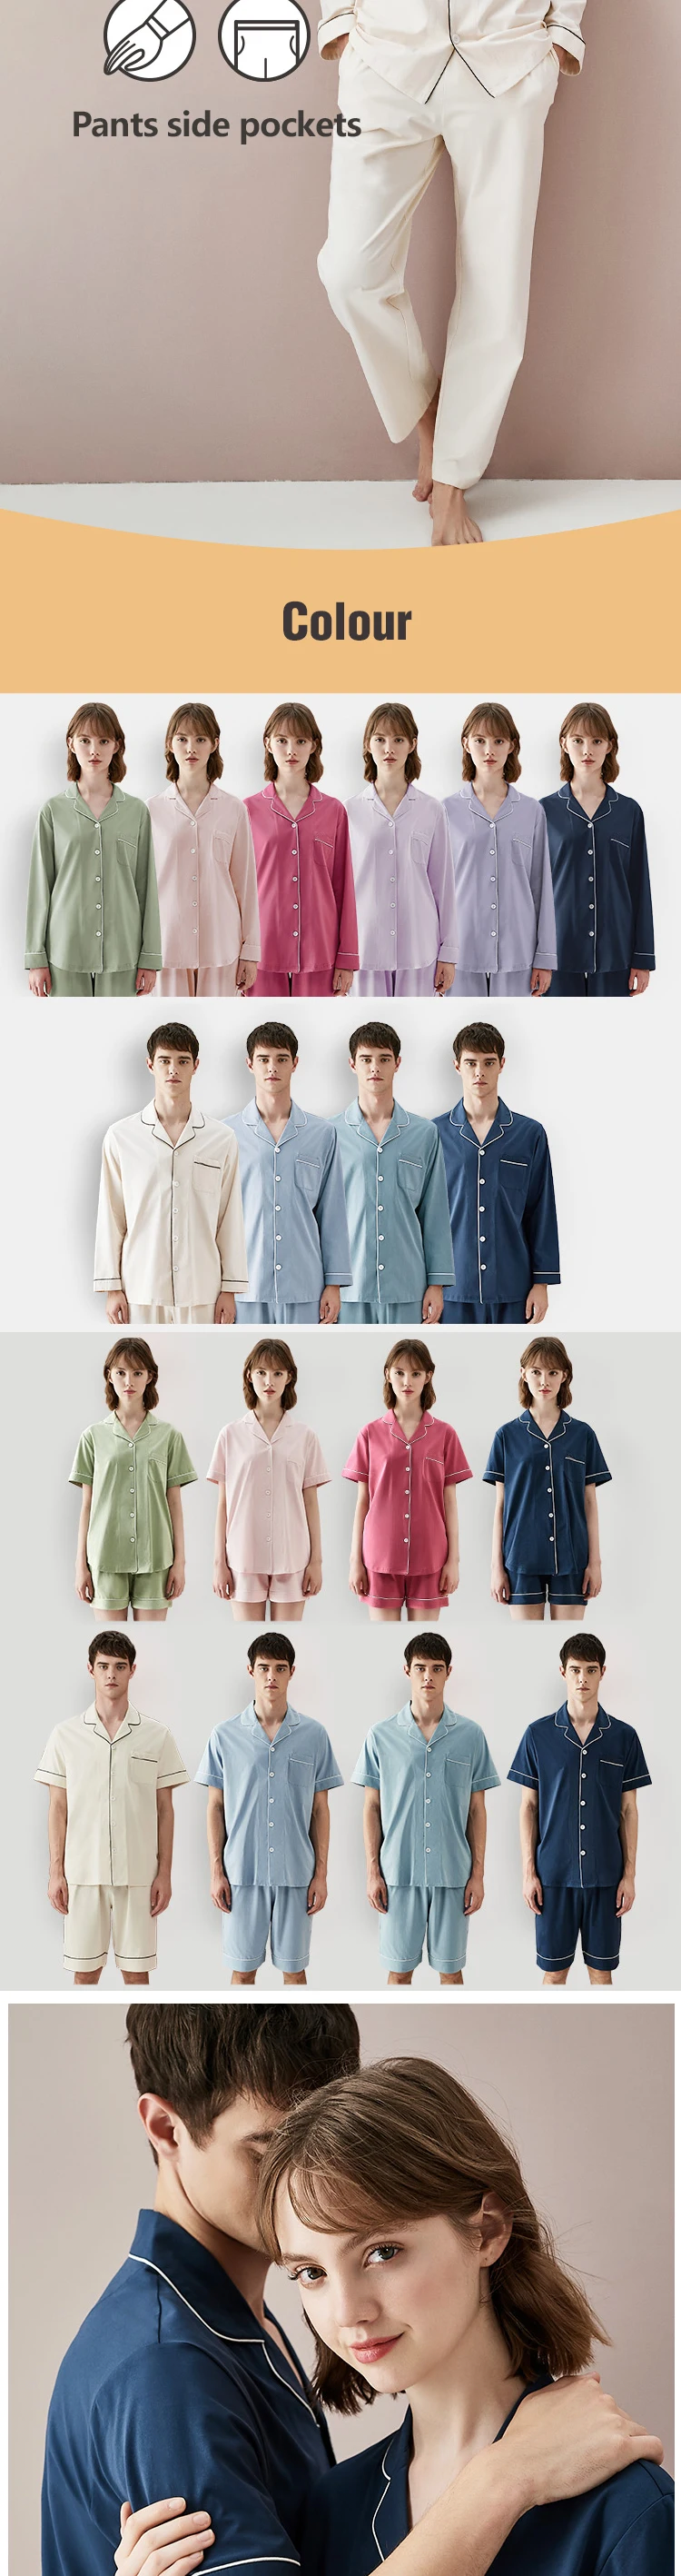 Enerup Fashion Copper Pe Bamboo Women's Half-Length Sleepwear Wholesale China Long Nightgown Pajamas Set